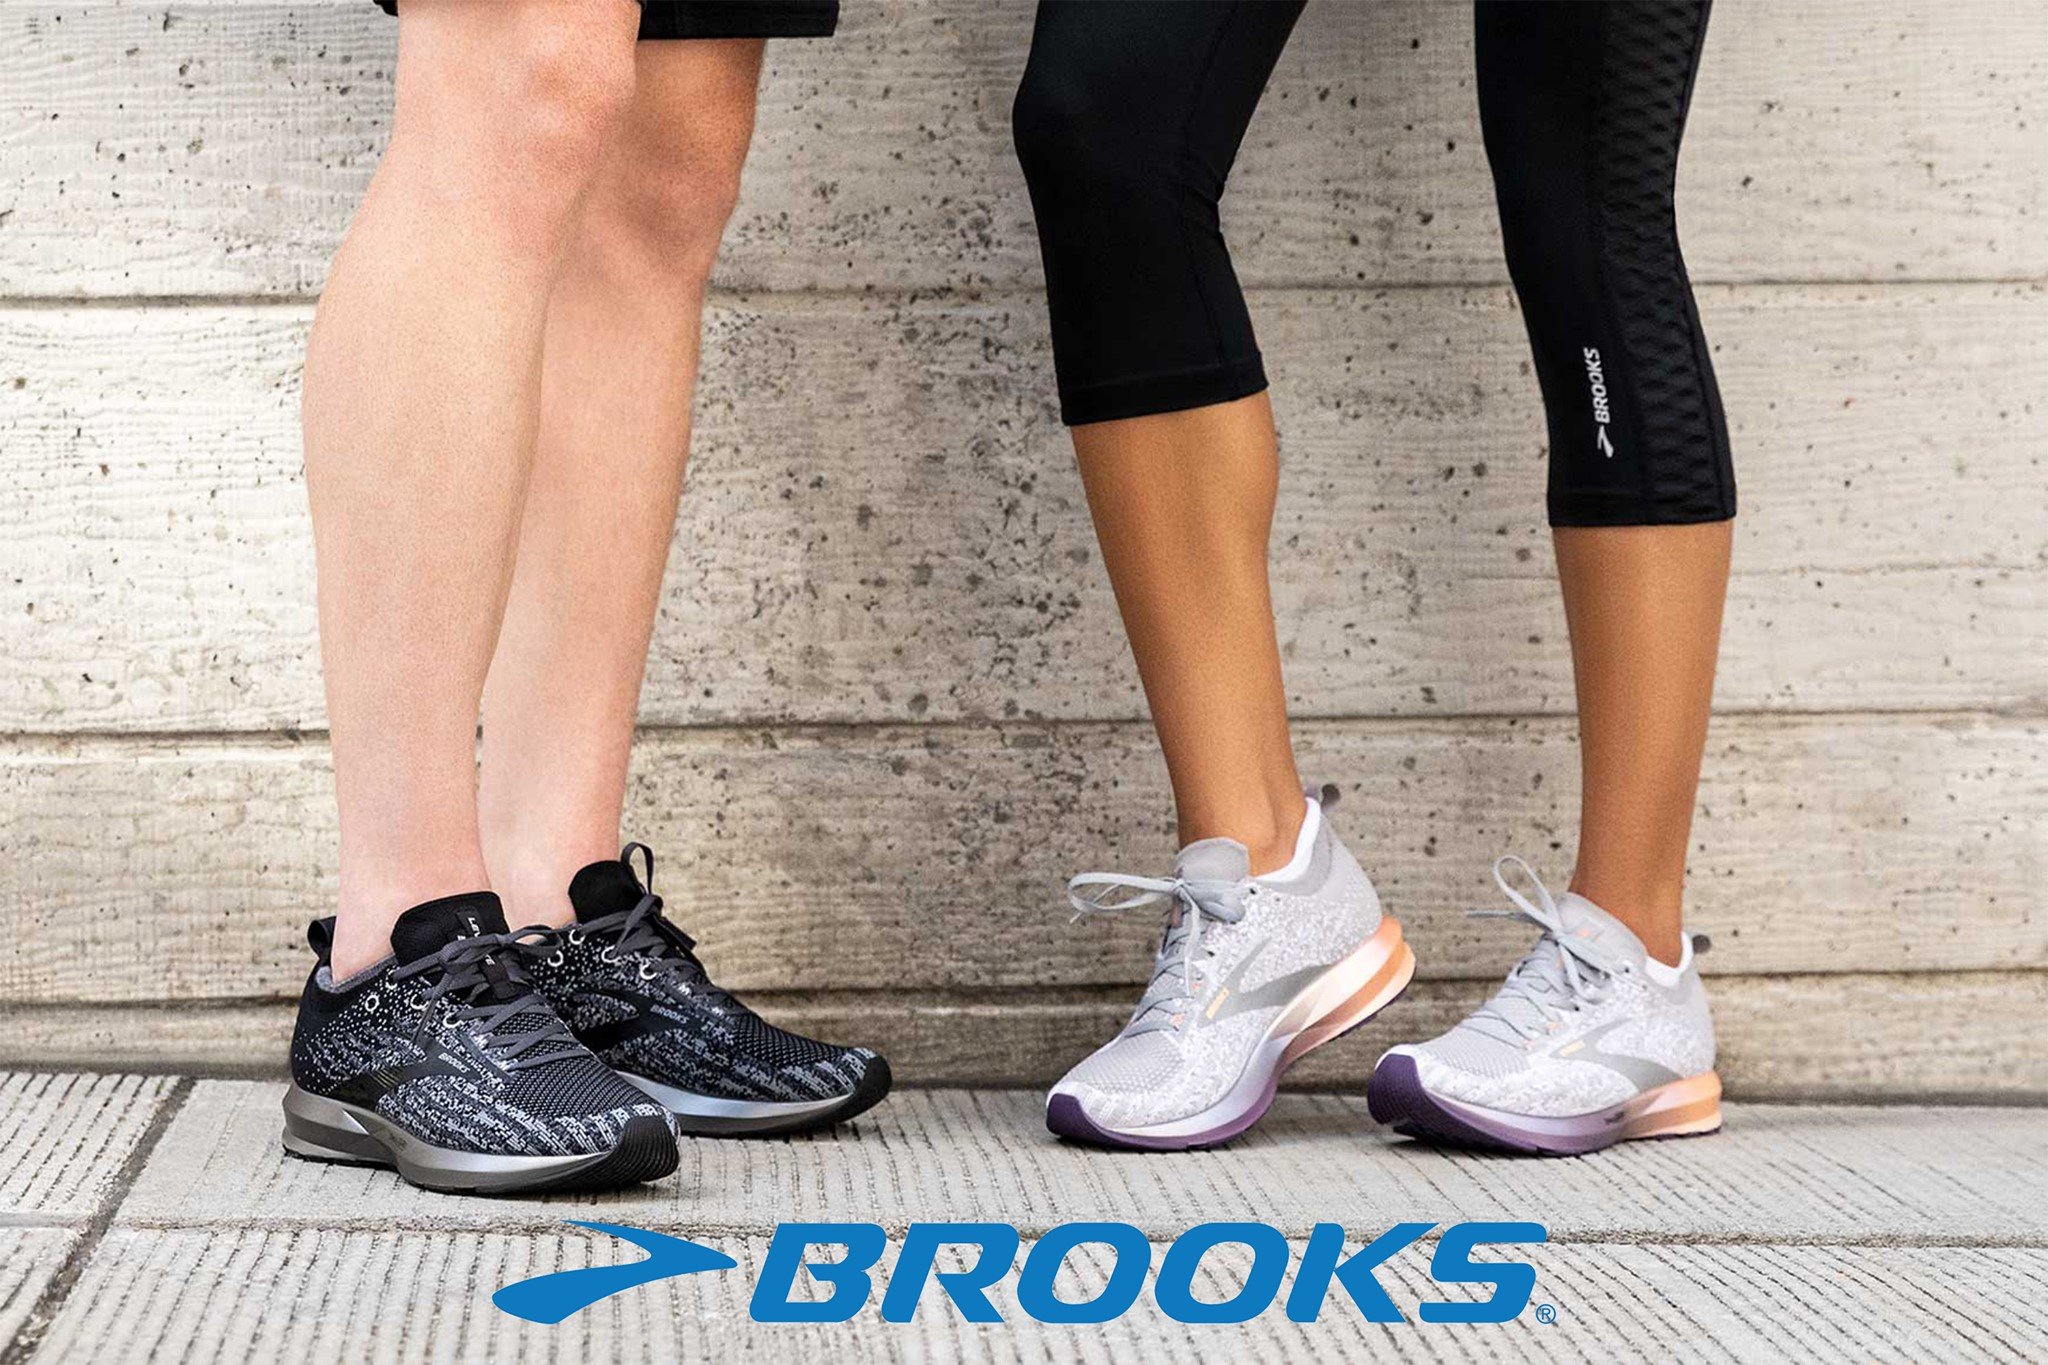 Scarpe Brooks running: storia e modelli di punta | LBM Sport